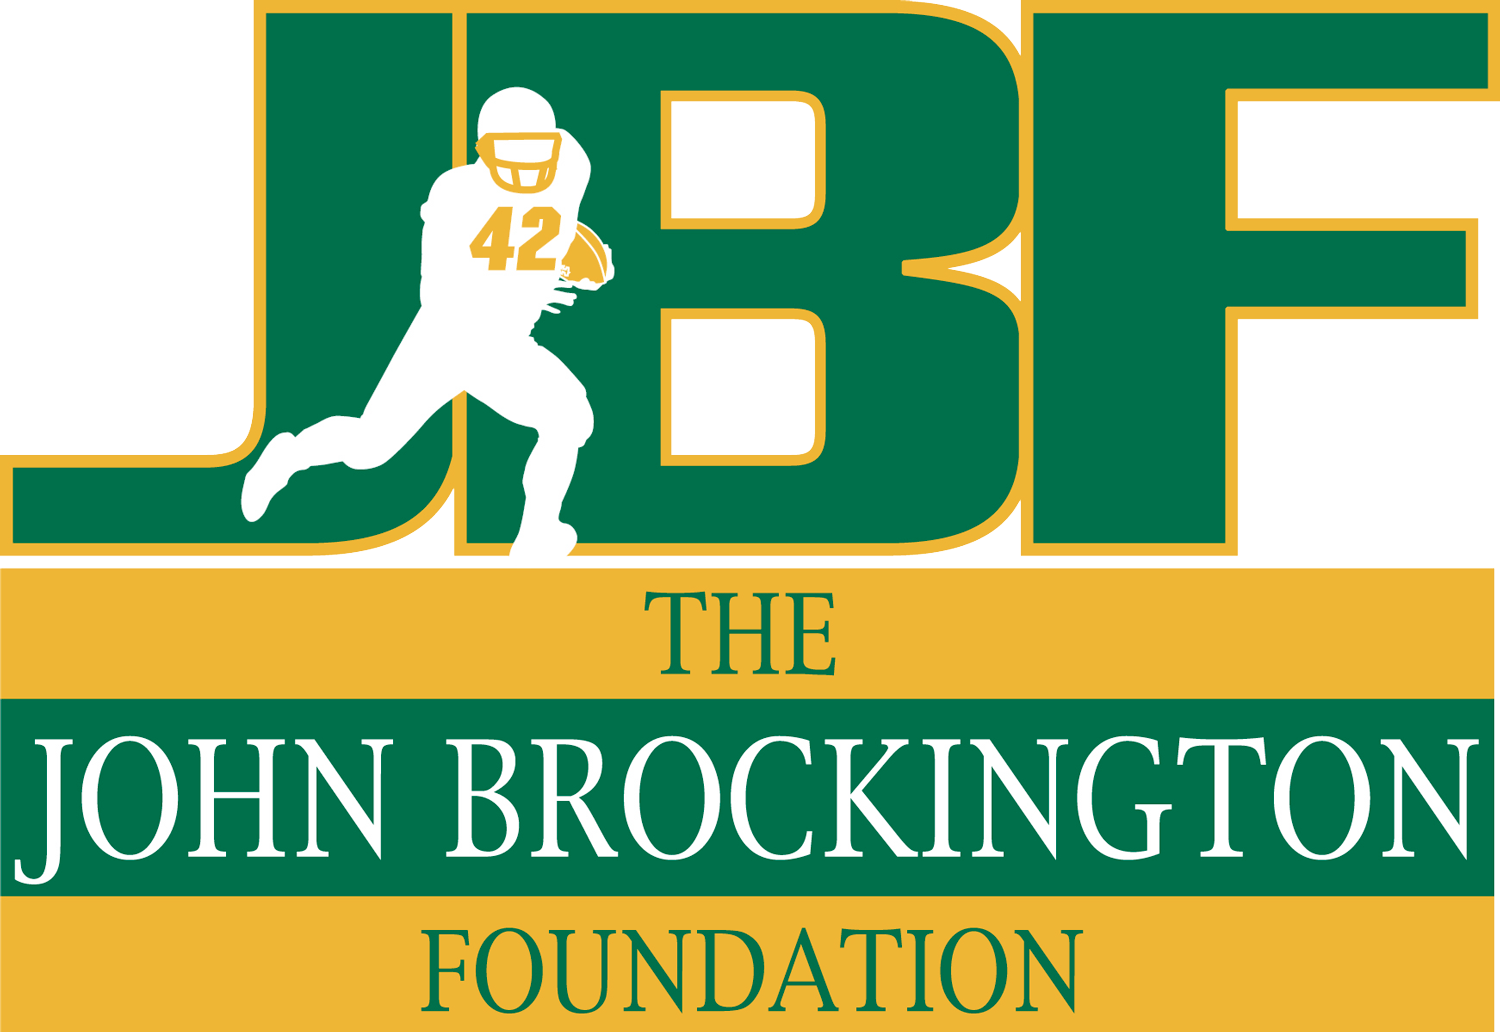 John Brockington Foundation